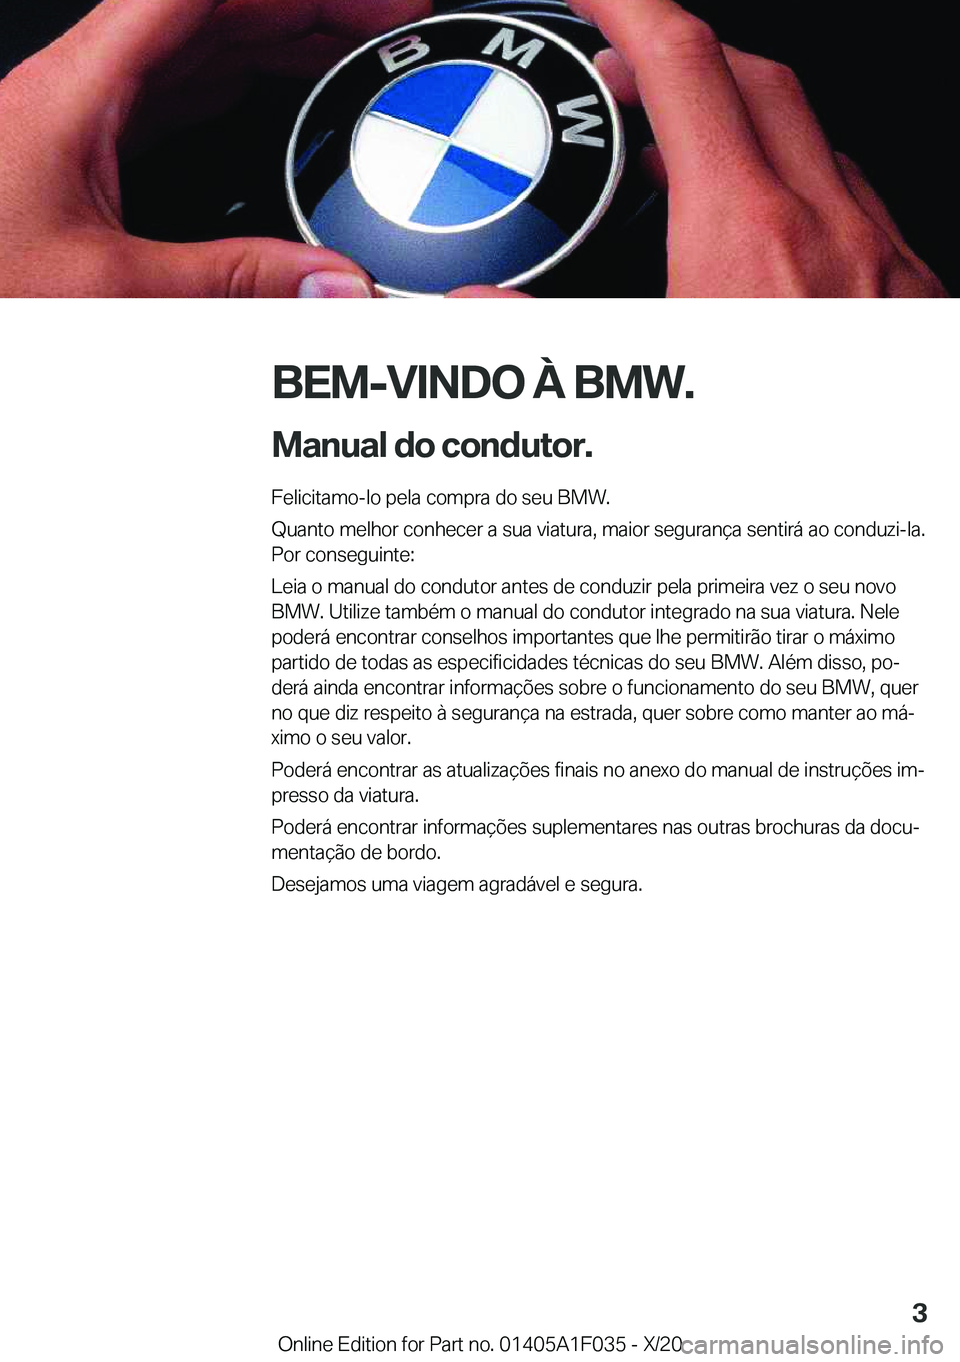 BMW X1 2021  Manual do condutor (in Portuguese) �B�E�M�-�V�I�N�D�O��À��B�M�W�.
�M�a�n�u�a�l��d�o��c�o�n�d�u�t�o�r�. �F�e�l�i�c�i�t�a�m�o�-�l�o��p�e�l�a��c�o�m�p�r�a��d�o��s�e�u��B�M�W�.
�Q�u�a�n�t�o��m�e�l�h�o�r��c�o�n�h�e�c�e�r��a��s